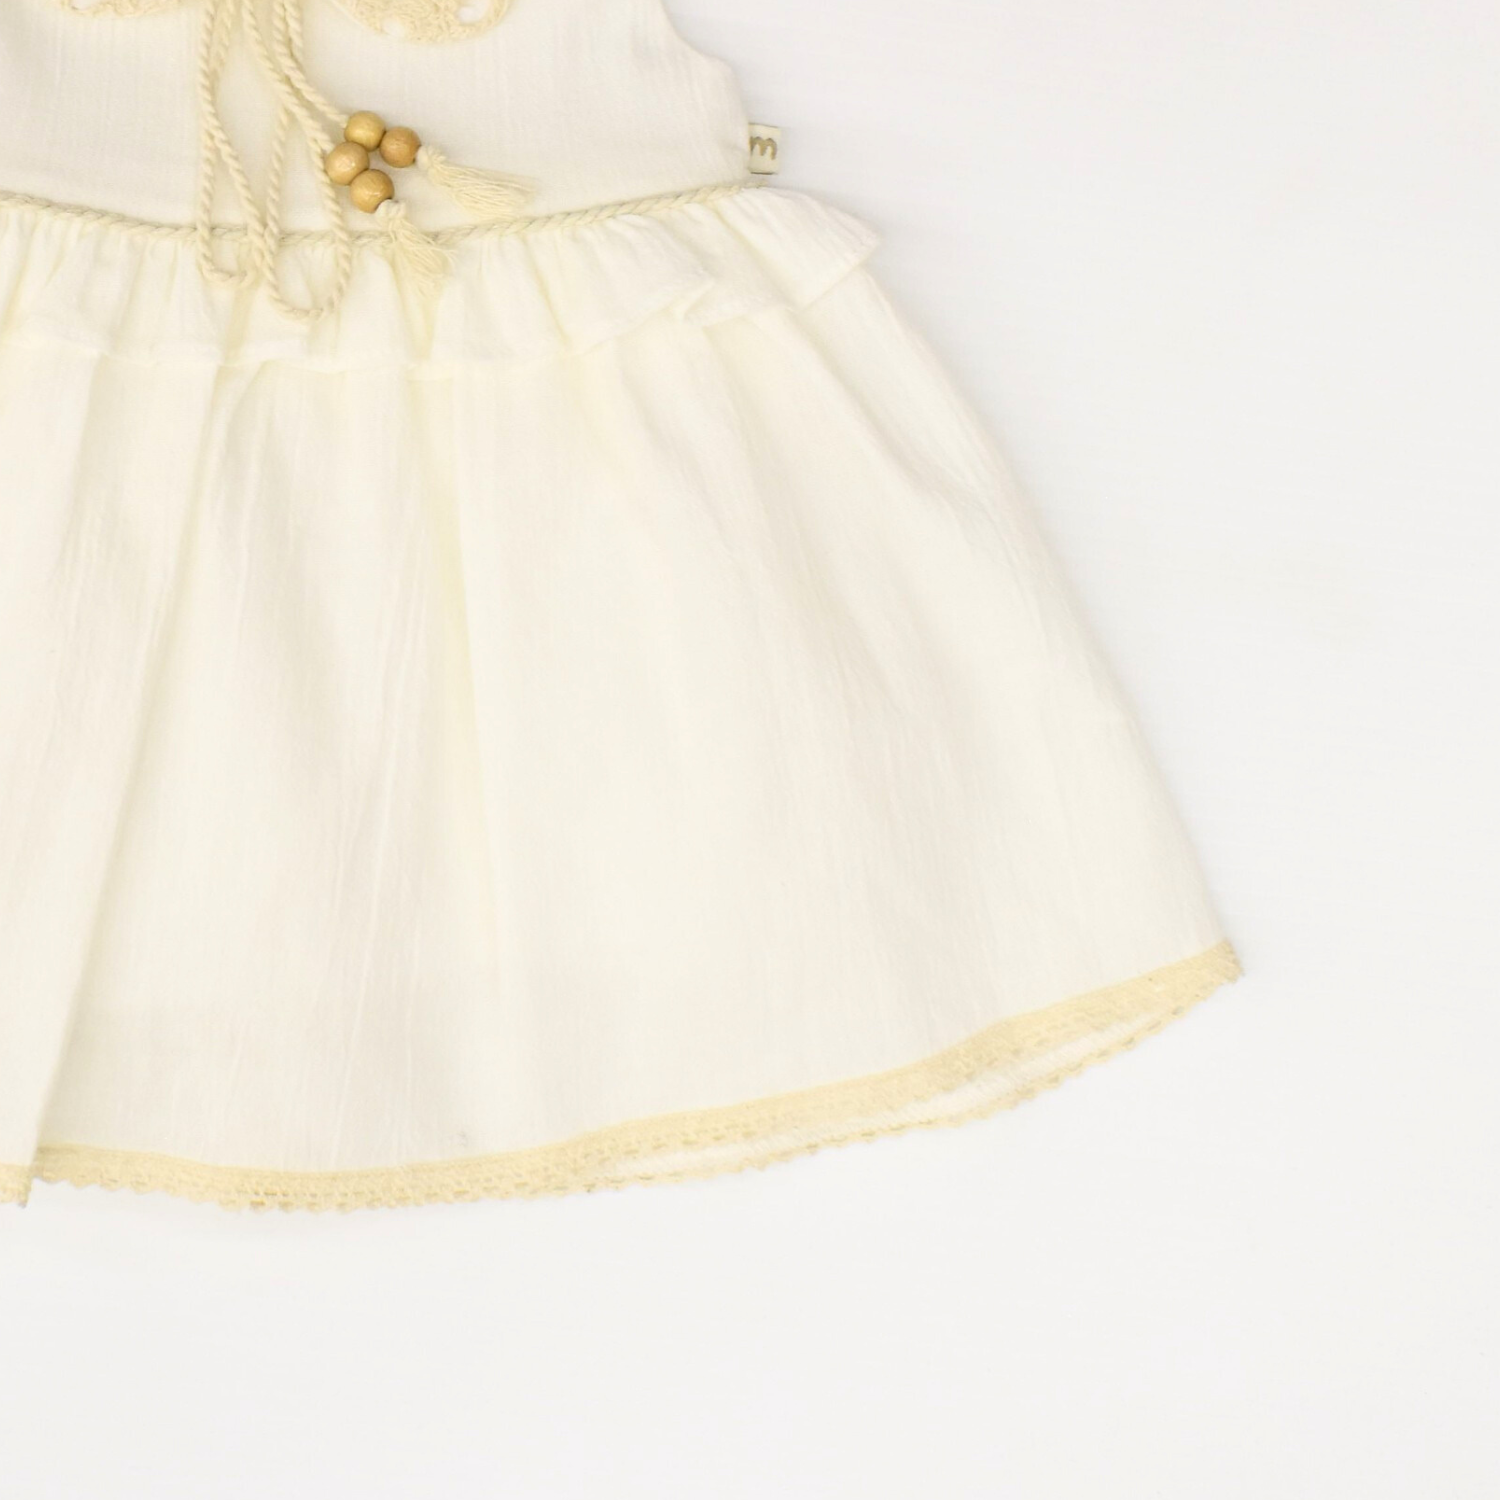 Soft Chic Baby Dress